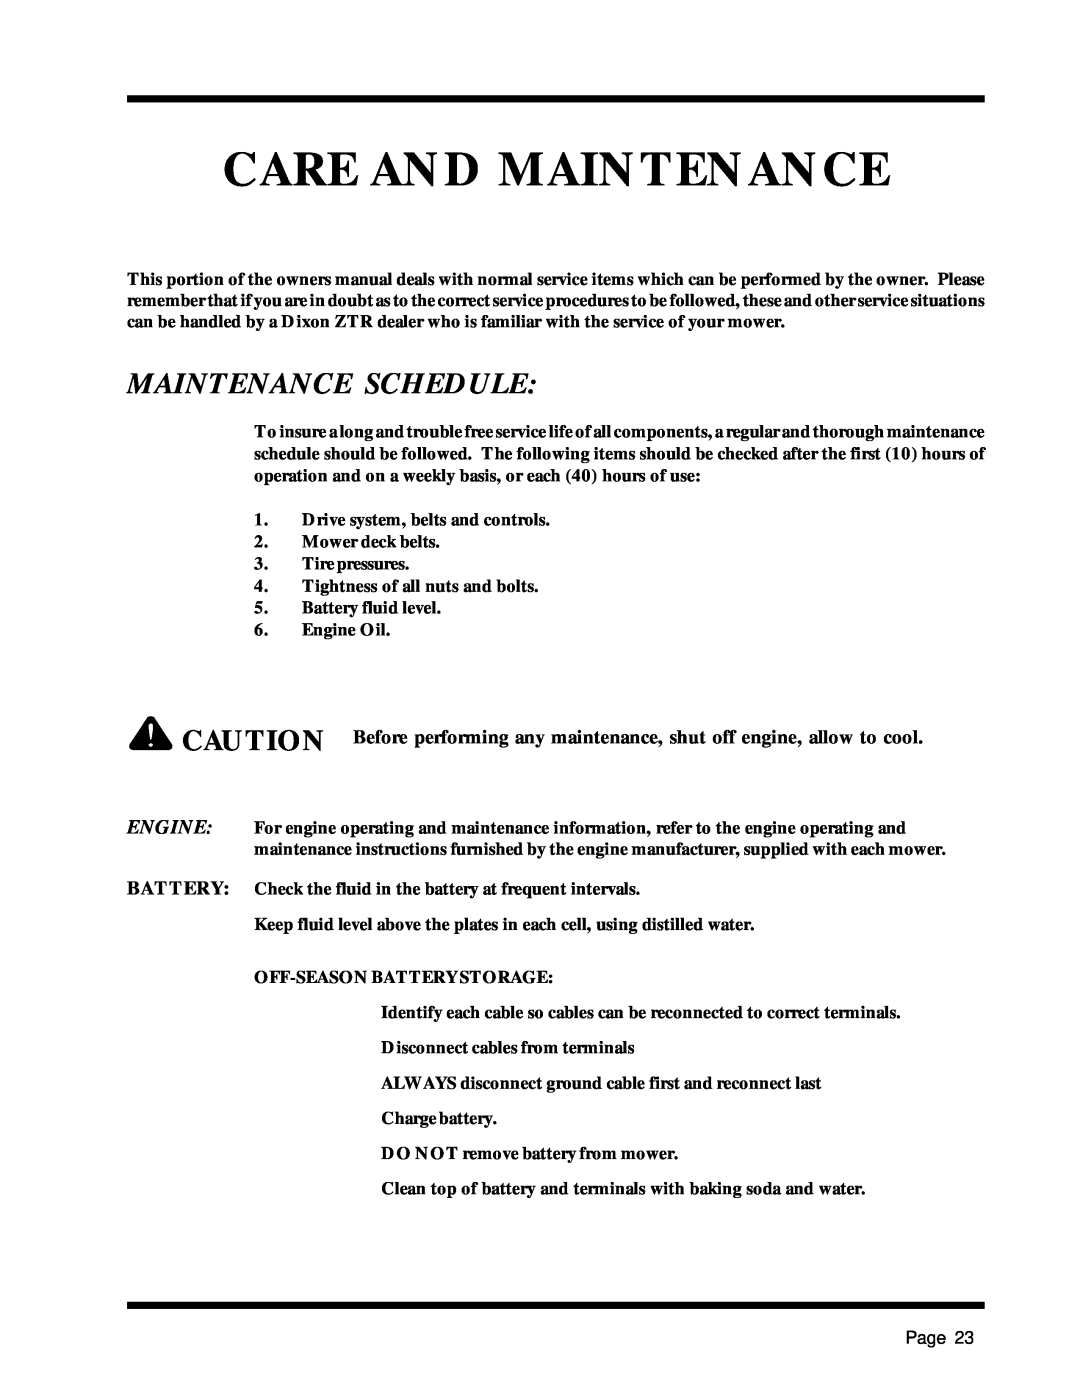 Dixon 1857-0599 manual Care And Maintenance, Maintenance Schedule 